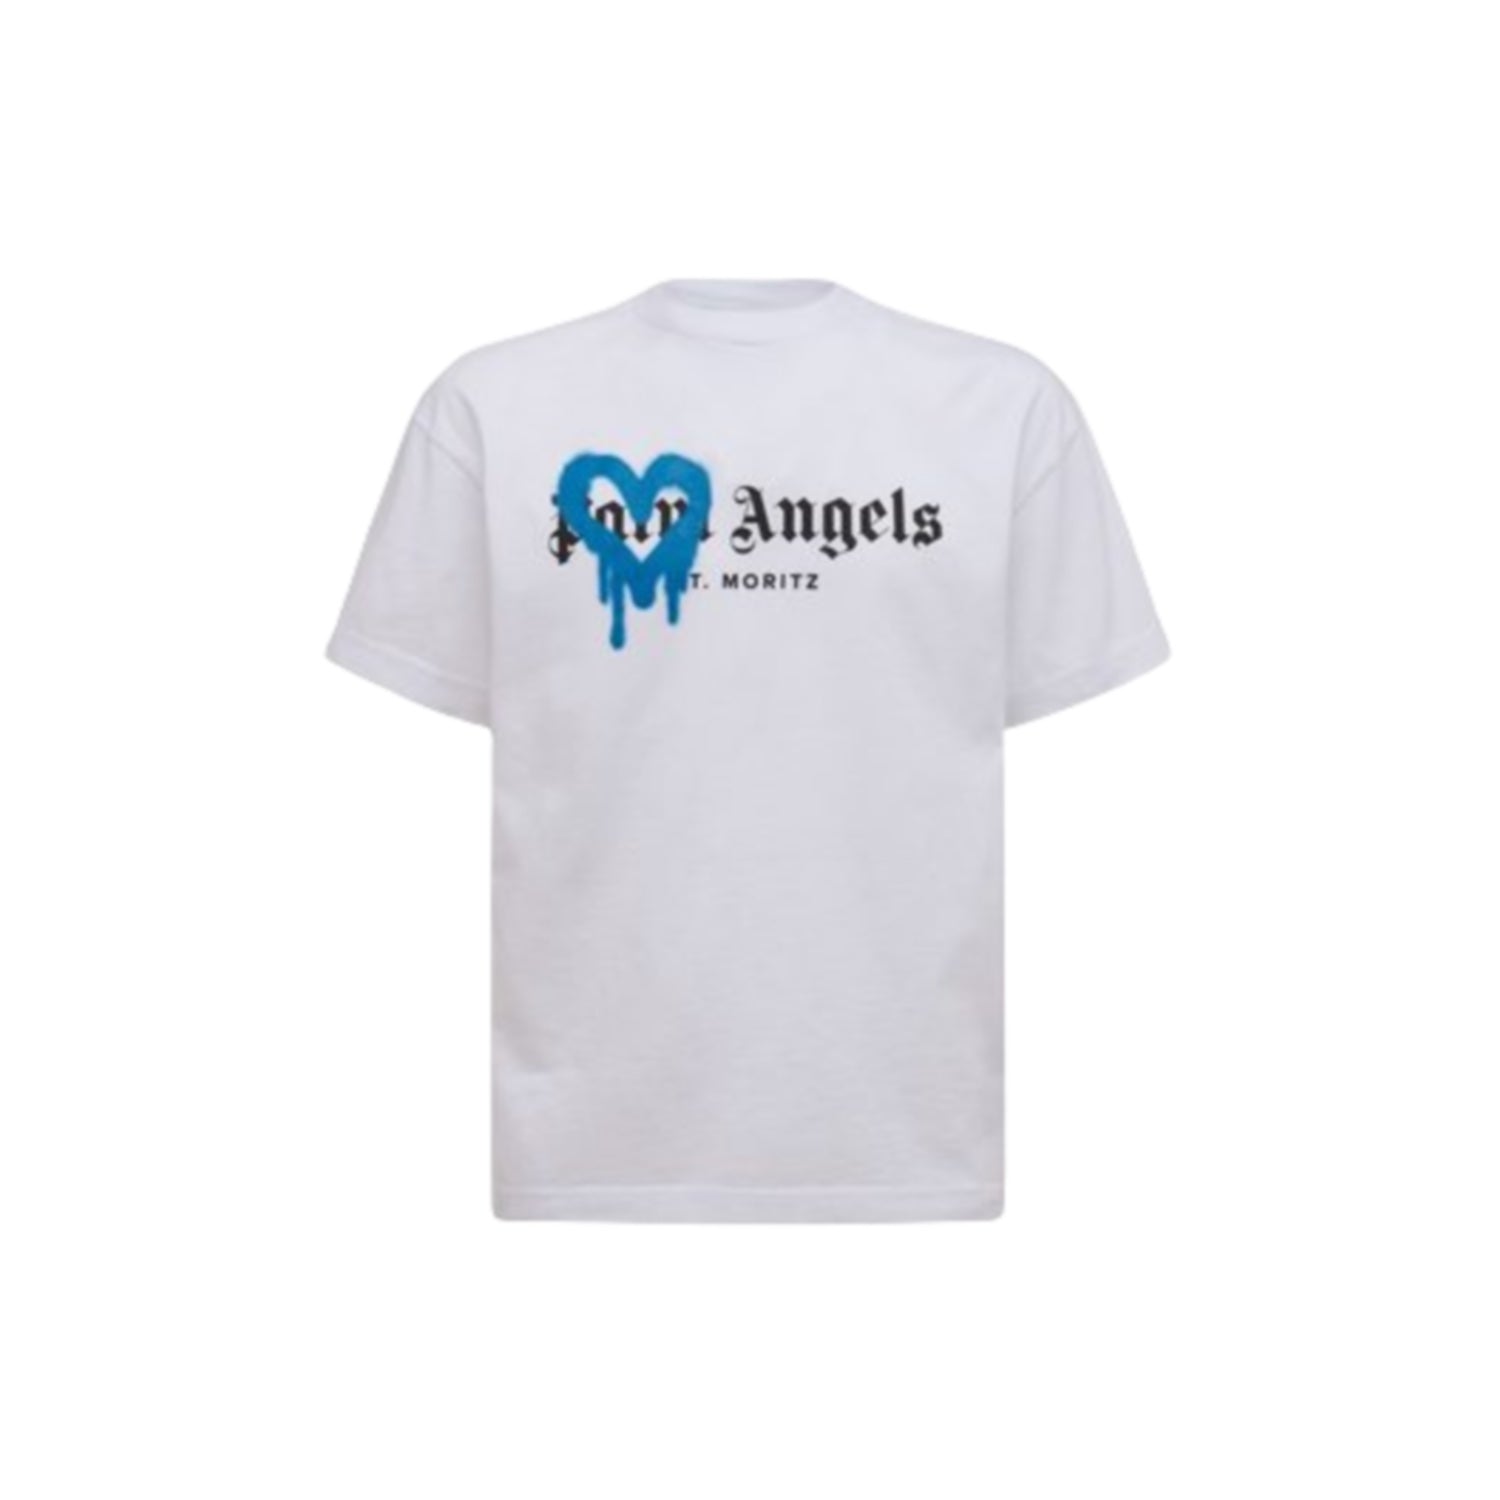 Palm Angels 'St Mortiz' T-shirt